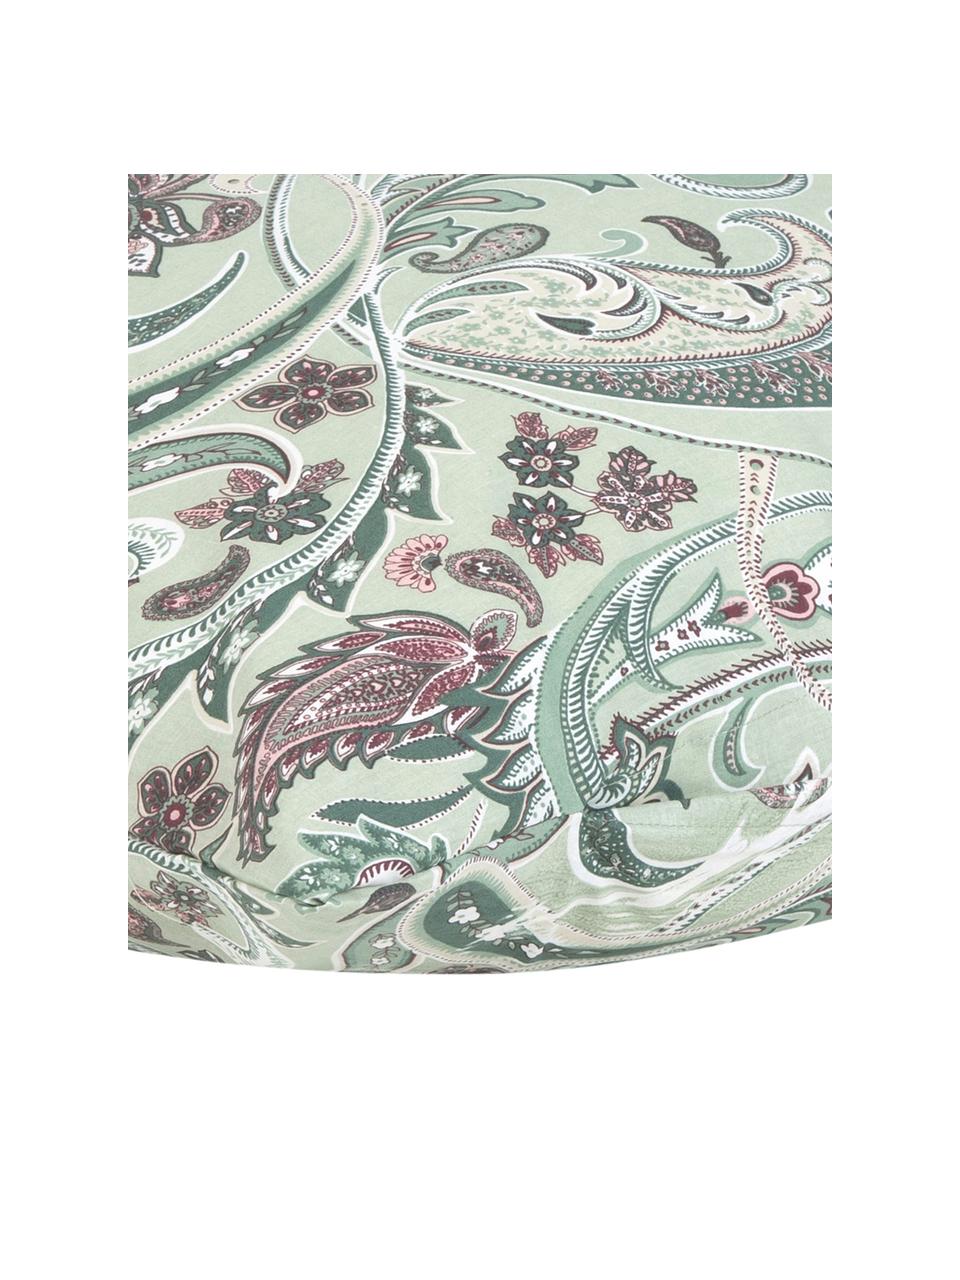 Baumwoll-Kopfkissenbezüge Liana in Grün mit Paisley-Muster, 2 Stück, Webart: Renforcé Fadendichte 144 , Grün, Mehrfarbig, B 40 x L 80 cm